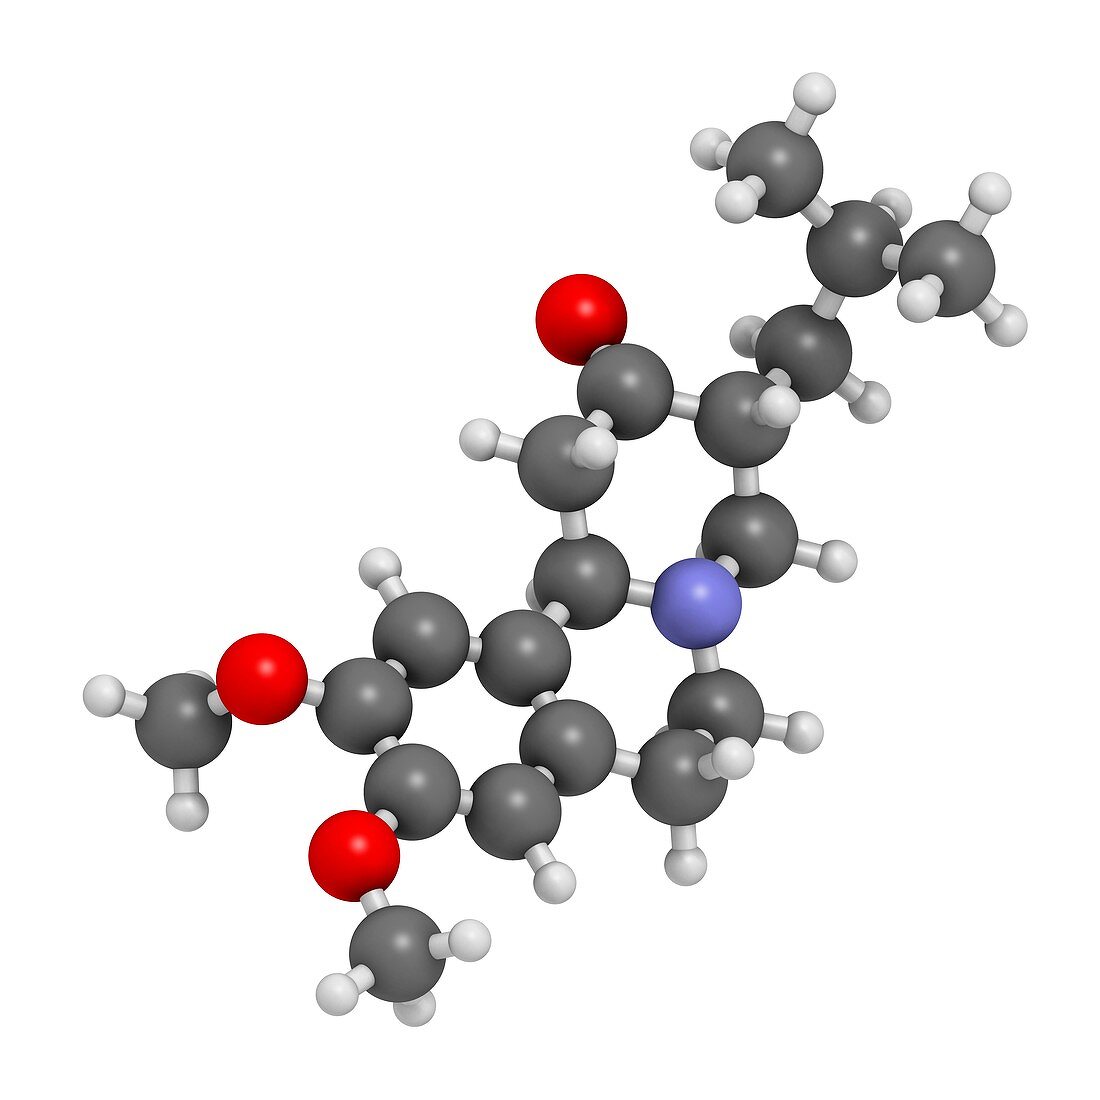 Tetrabenazine hyperkinetic disorder drug molecule